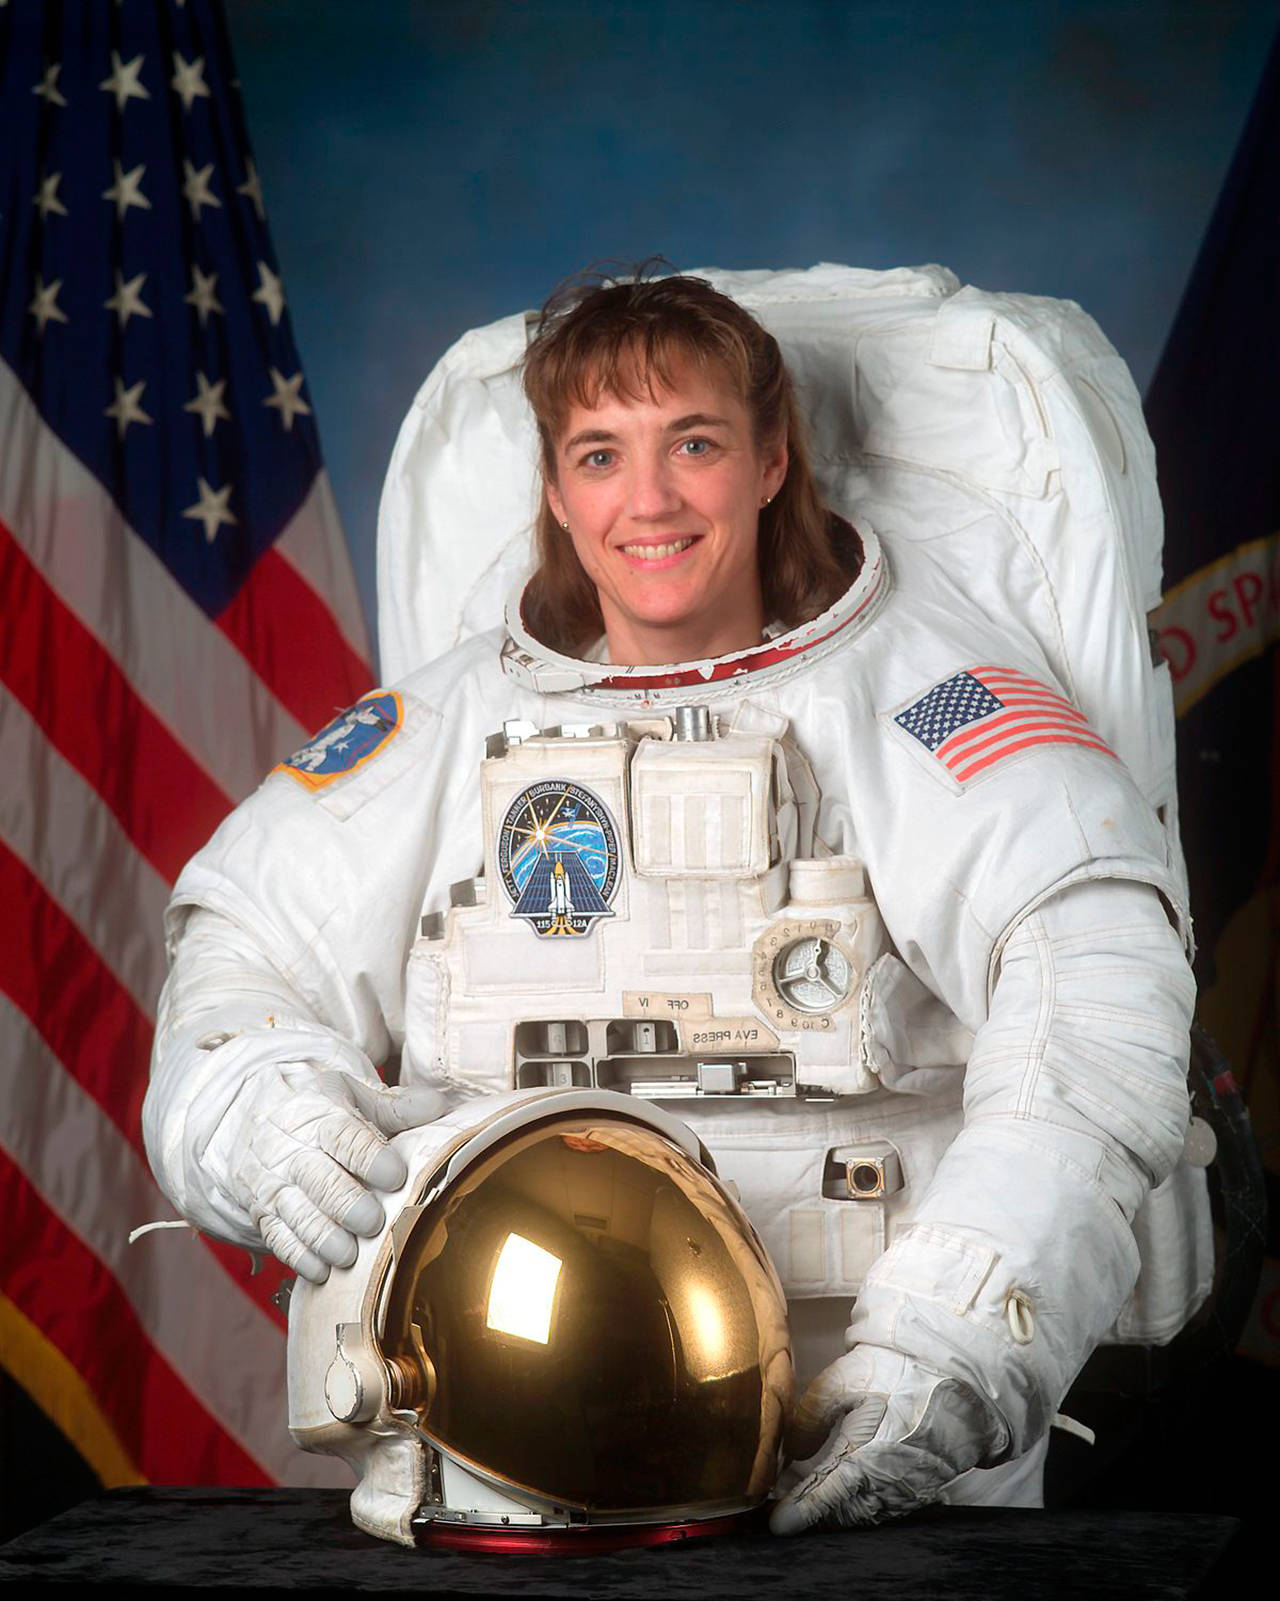 NASA astronaut visits Lopez school